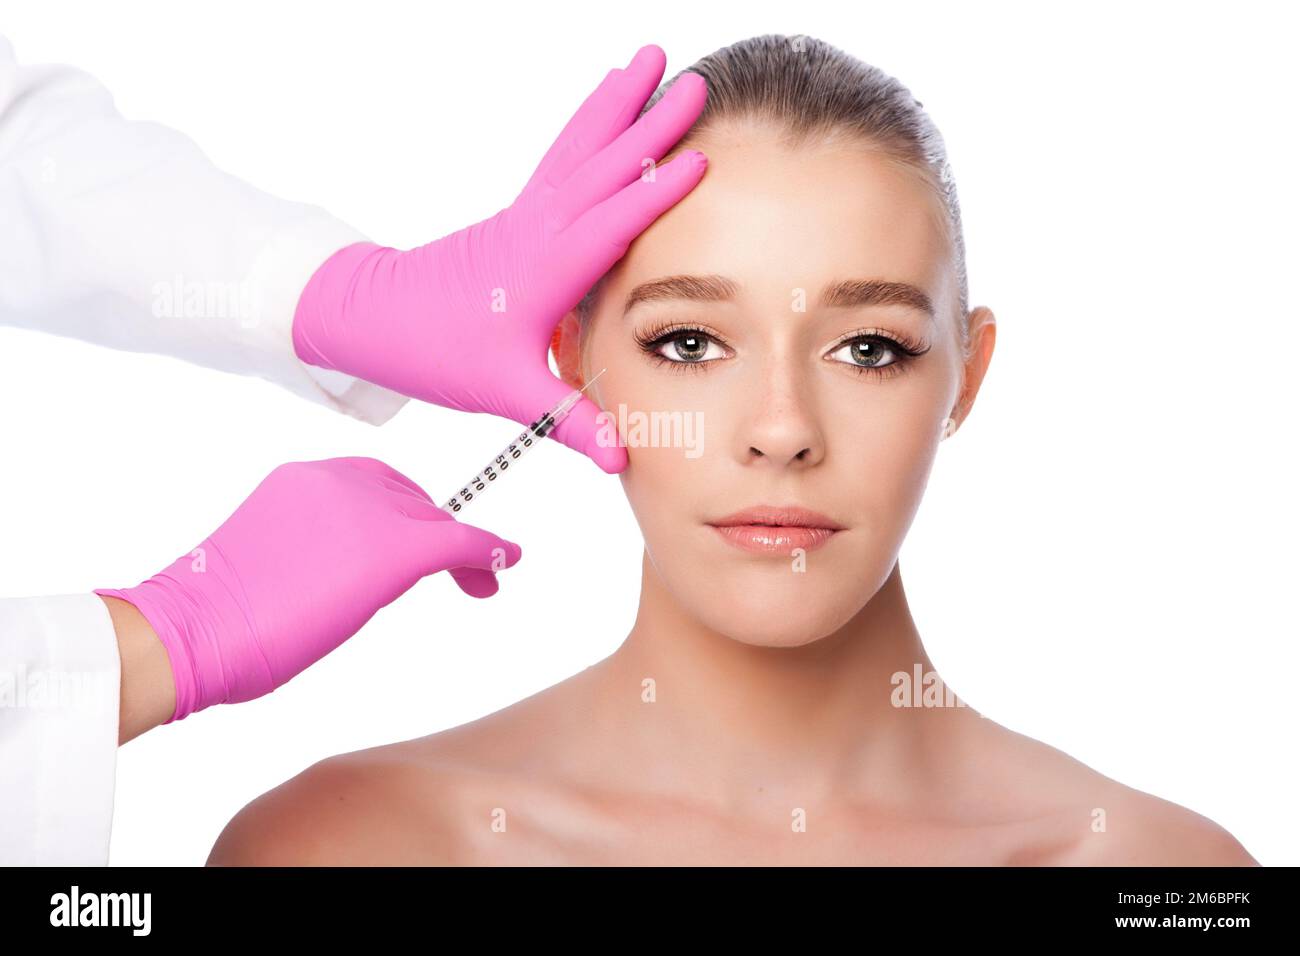 Injection facial skincare spa beauty treatment Stock Photo